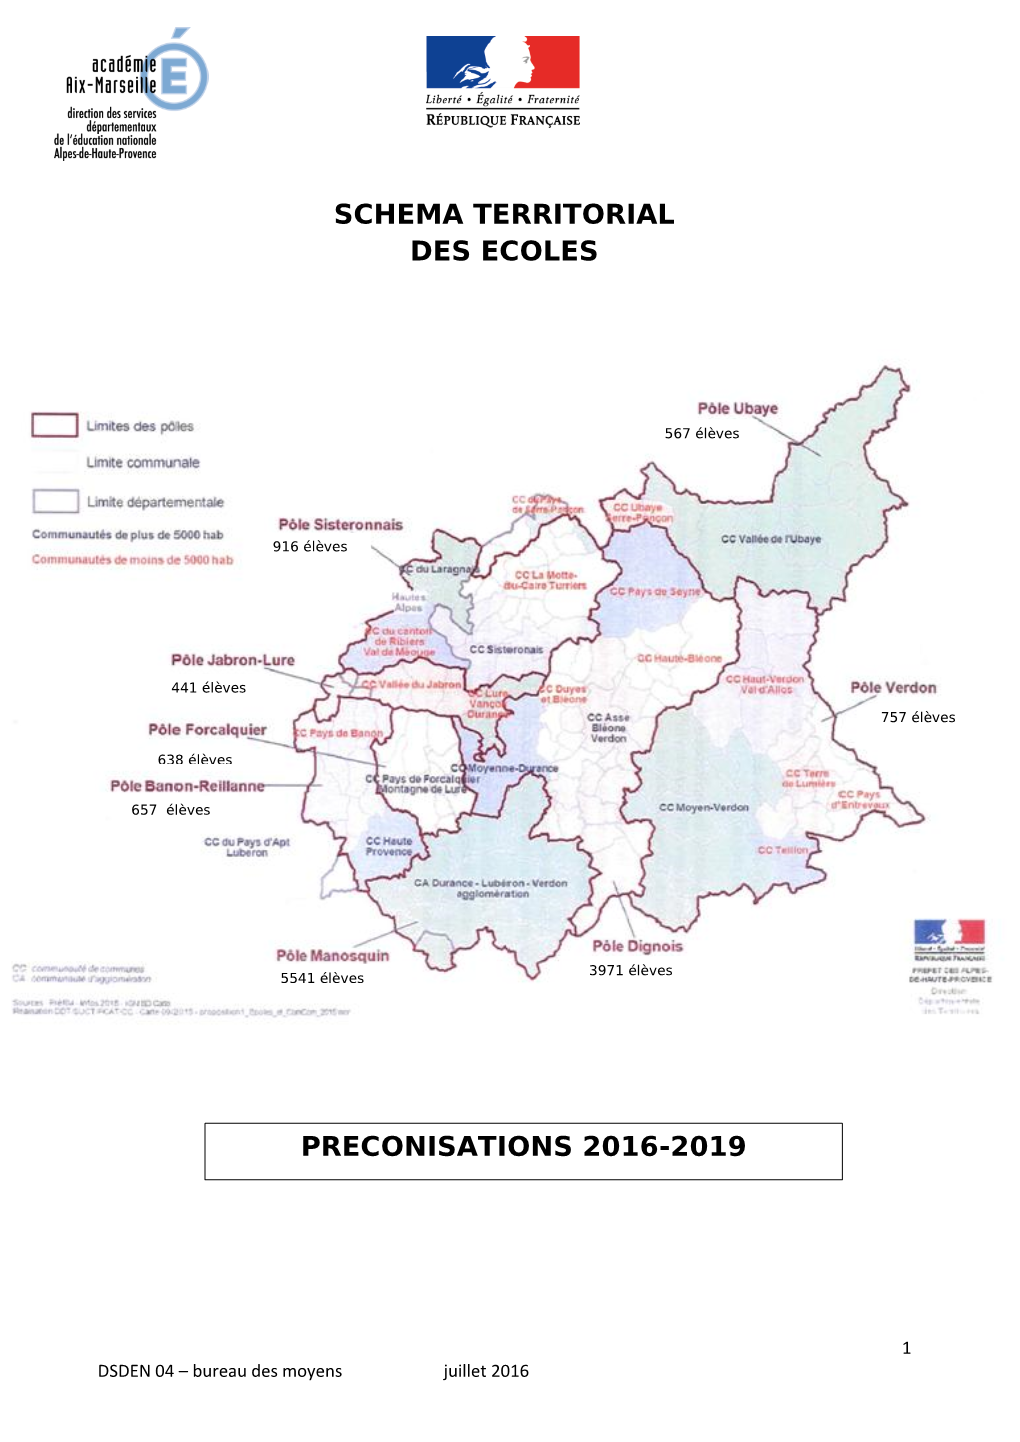 Schema Territorial Des Ecoles Preconisations 2016